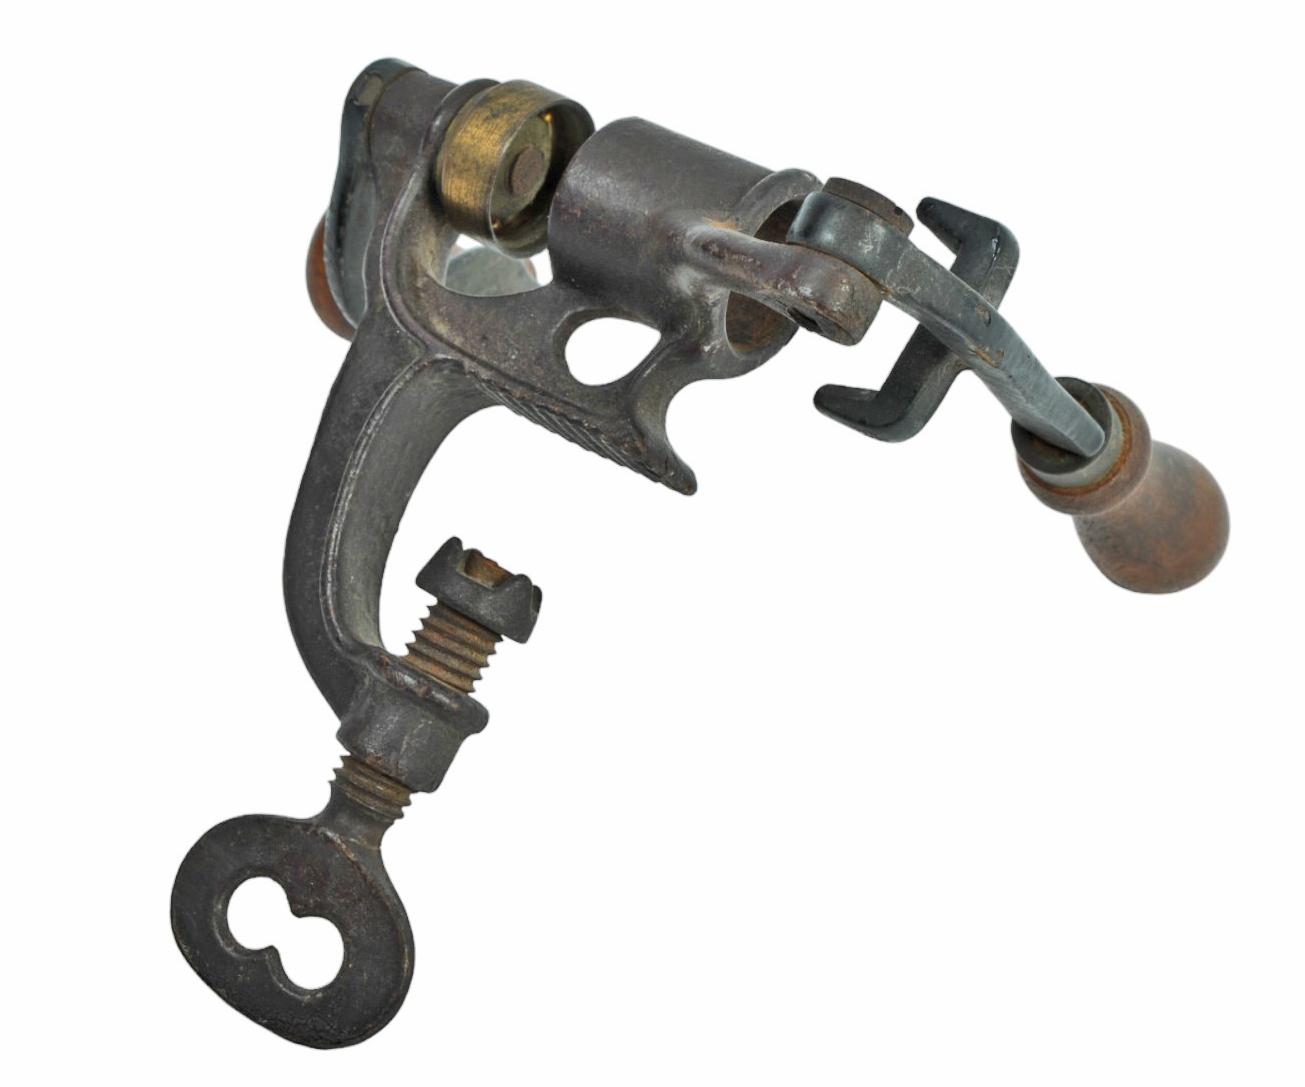 Antique Shotgun Reloading Tools (RM)